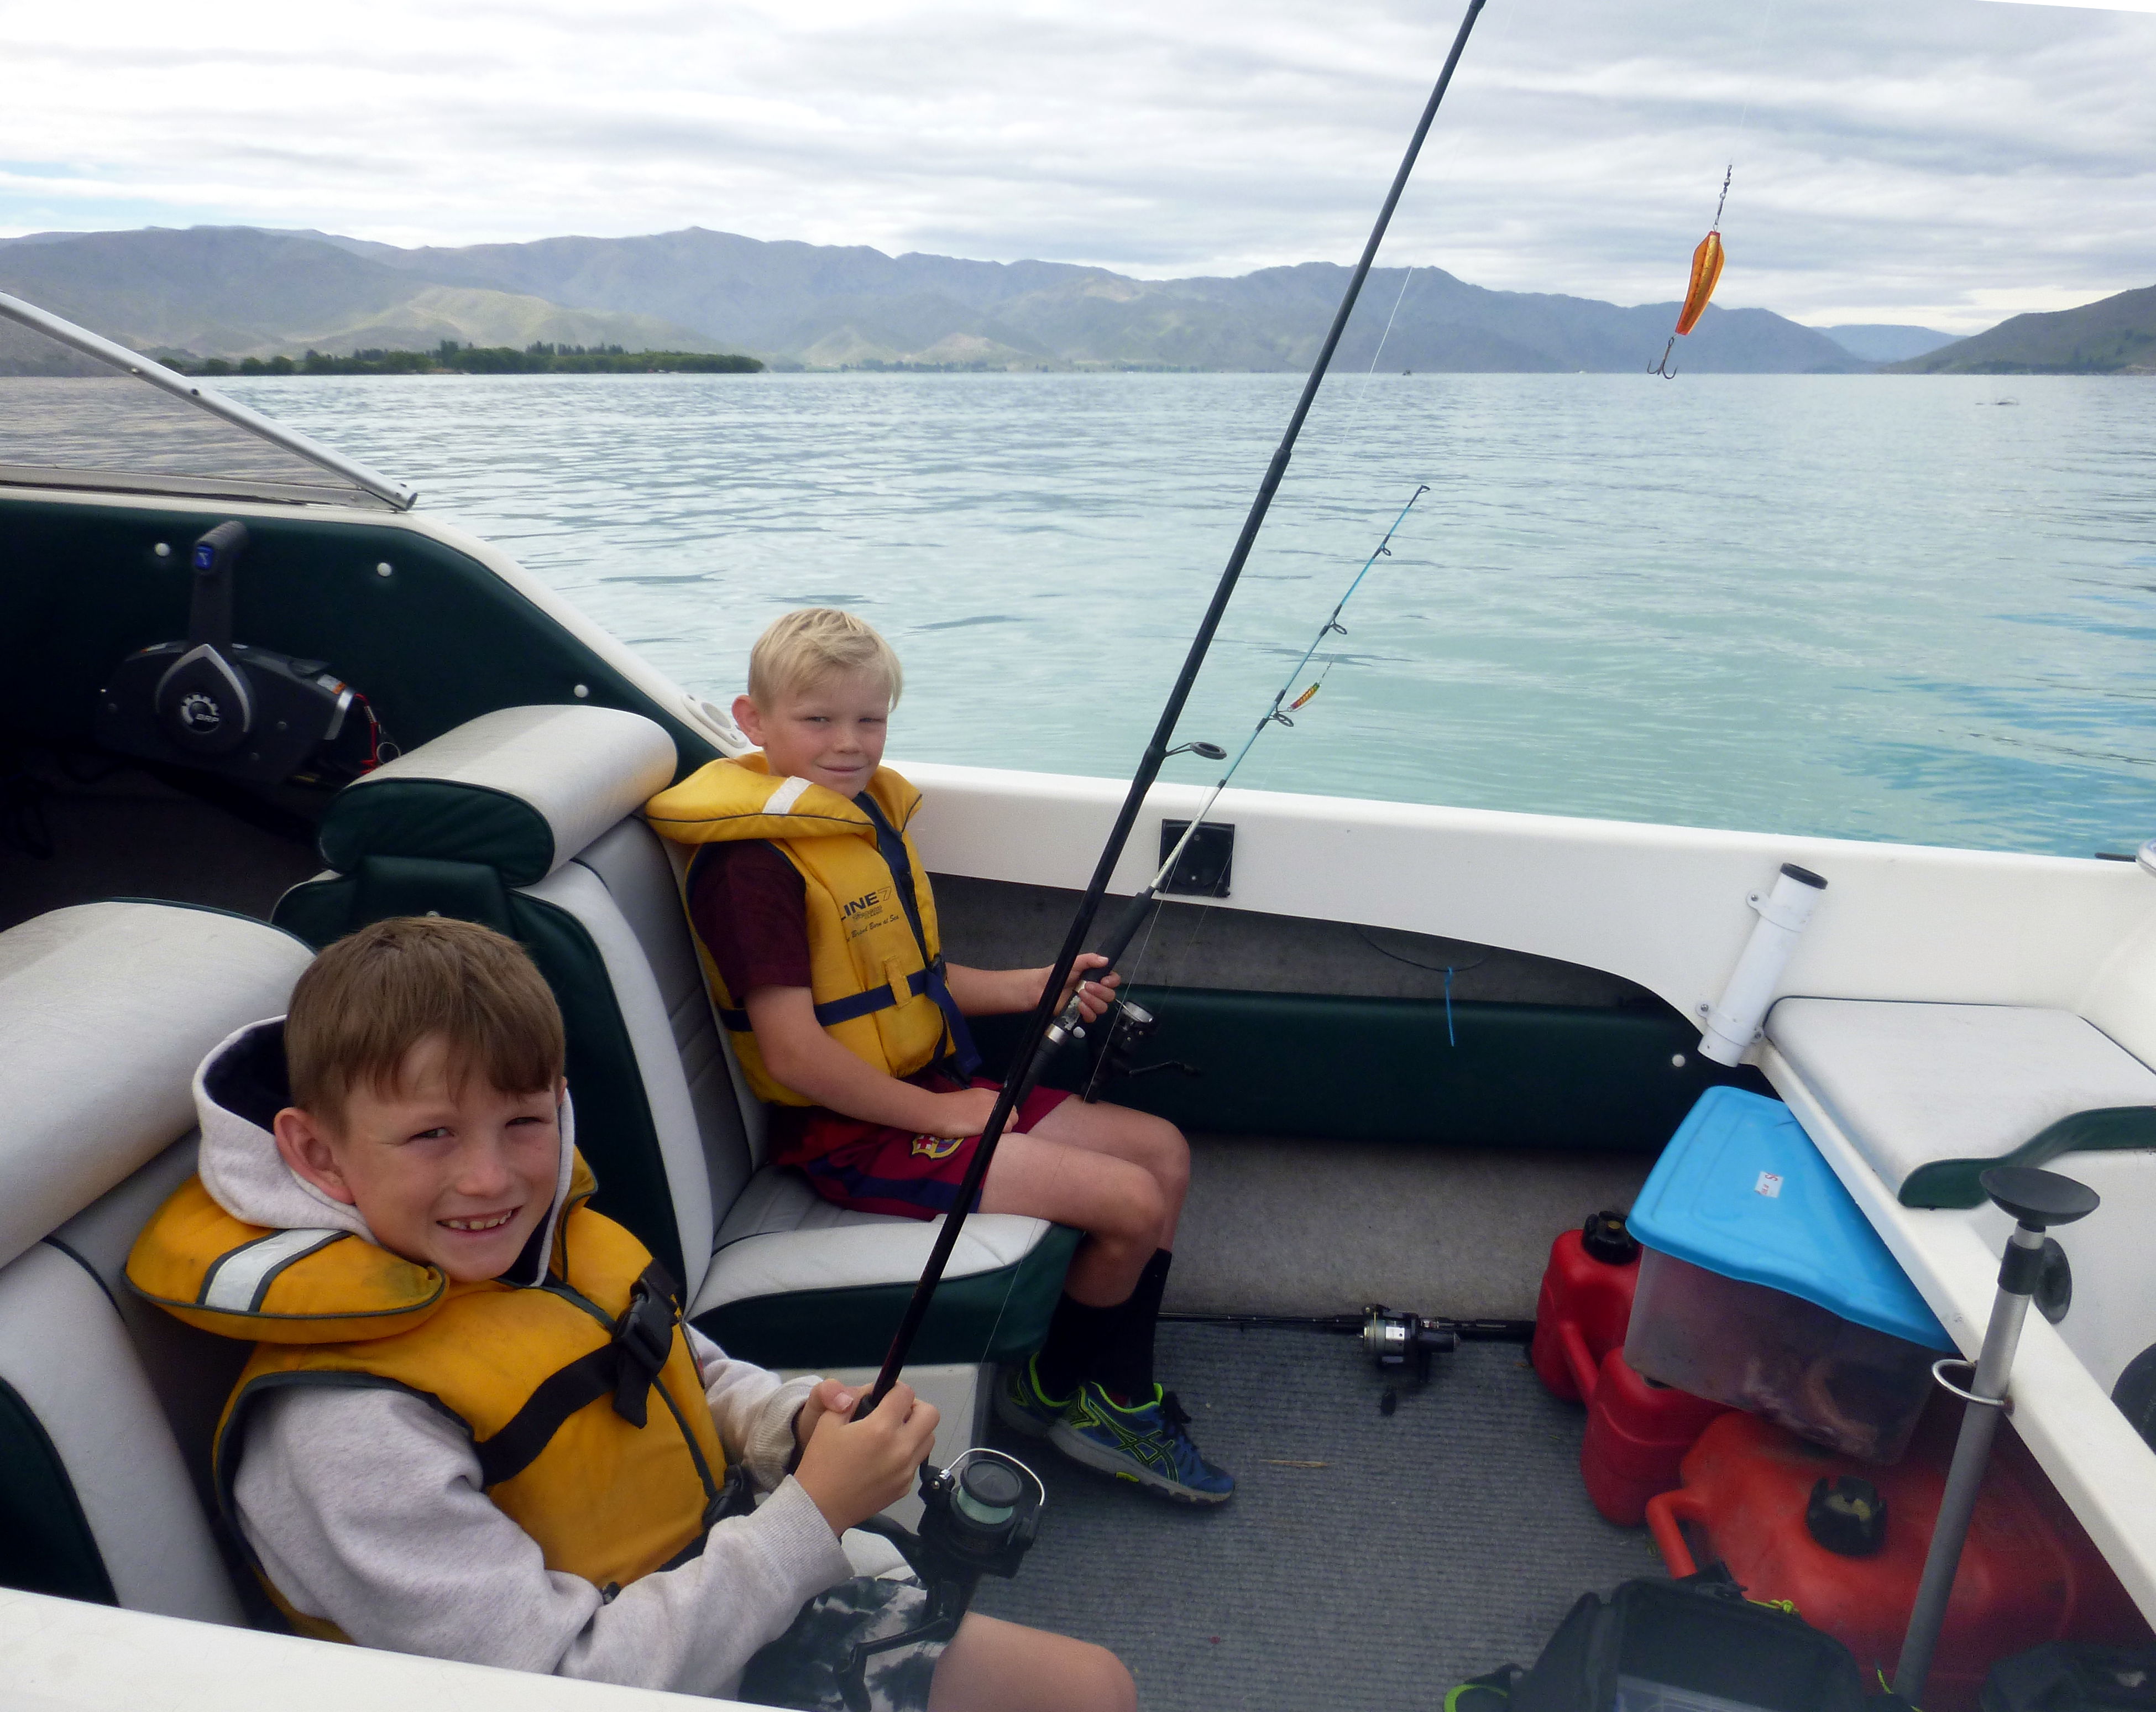 Adam tarrant Ben Smith enjoying some holiday fishing on Lake Benmore